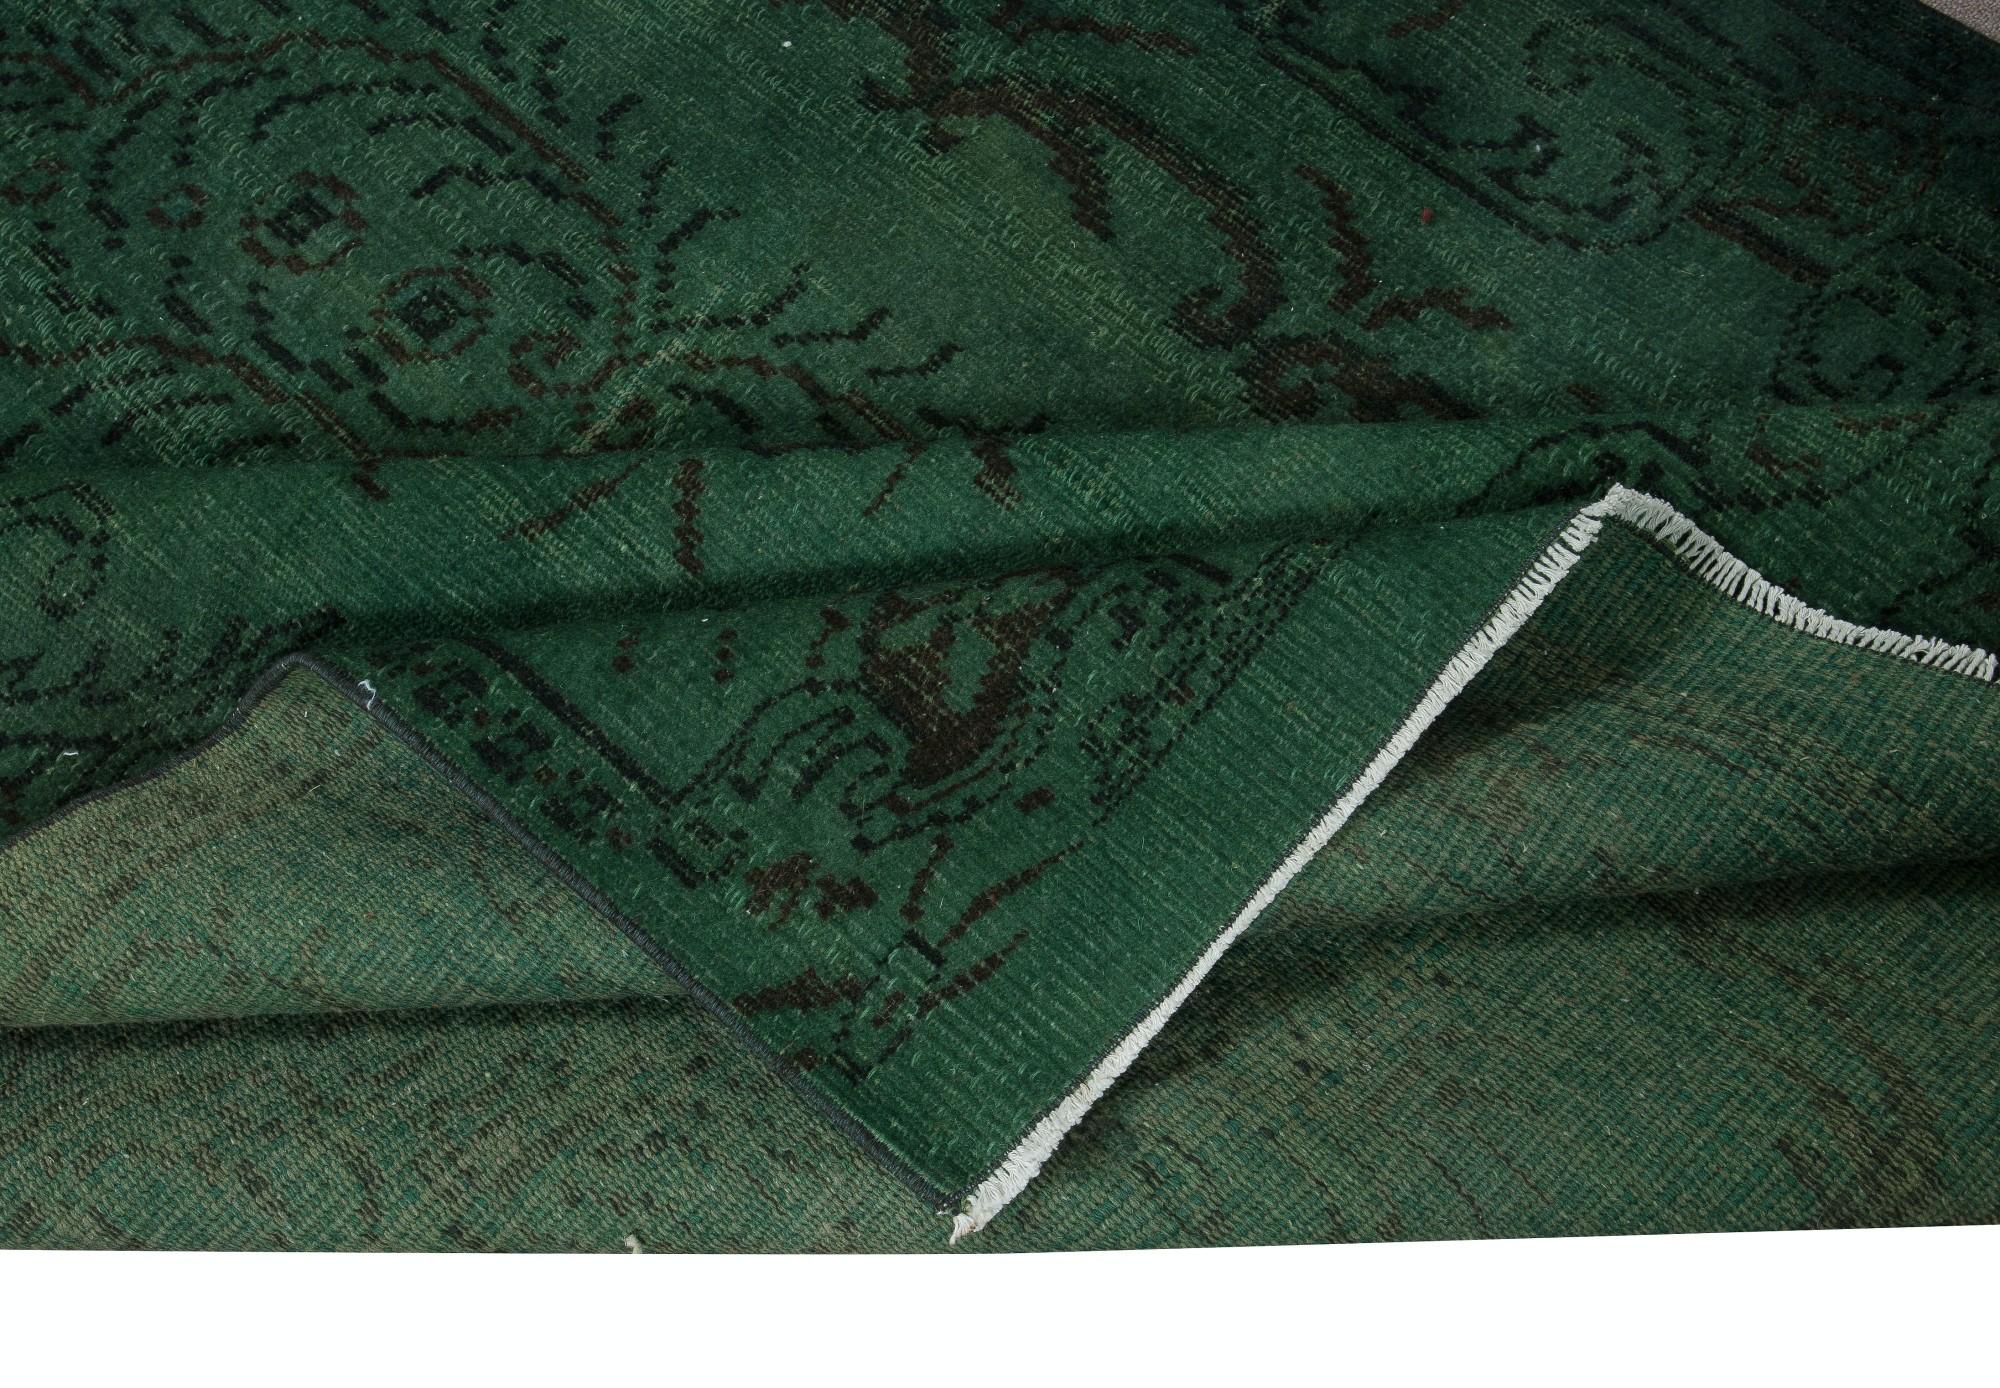 Hand-Knotted 5.6x8.8 Ft Dark Green Modern Handmade Area Rug, European Design Turkish Carpet For Sale